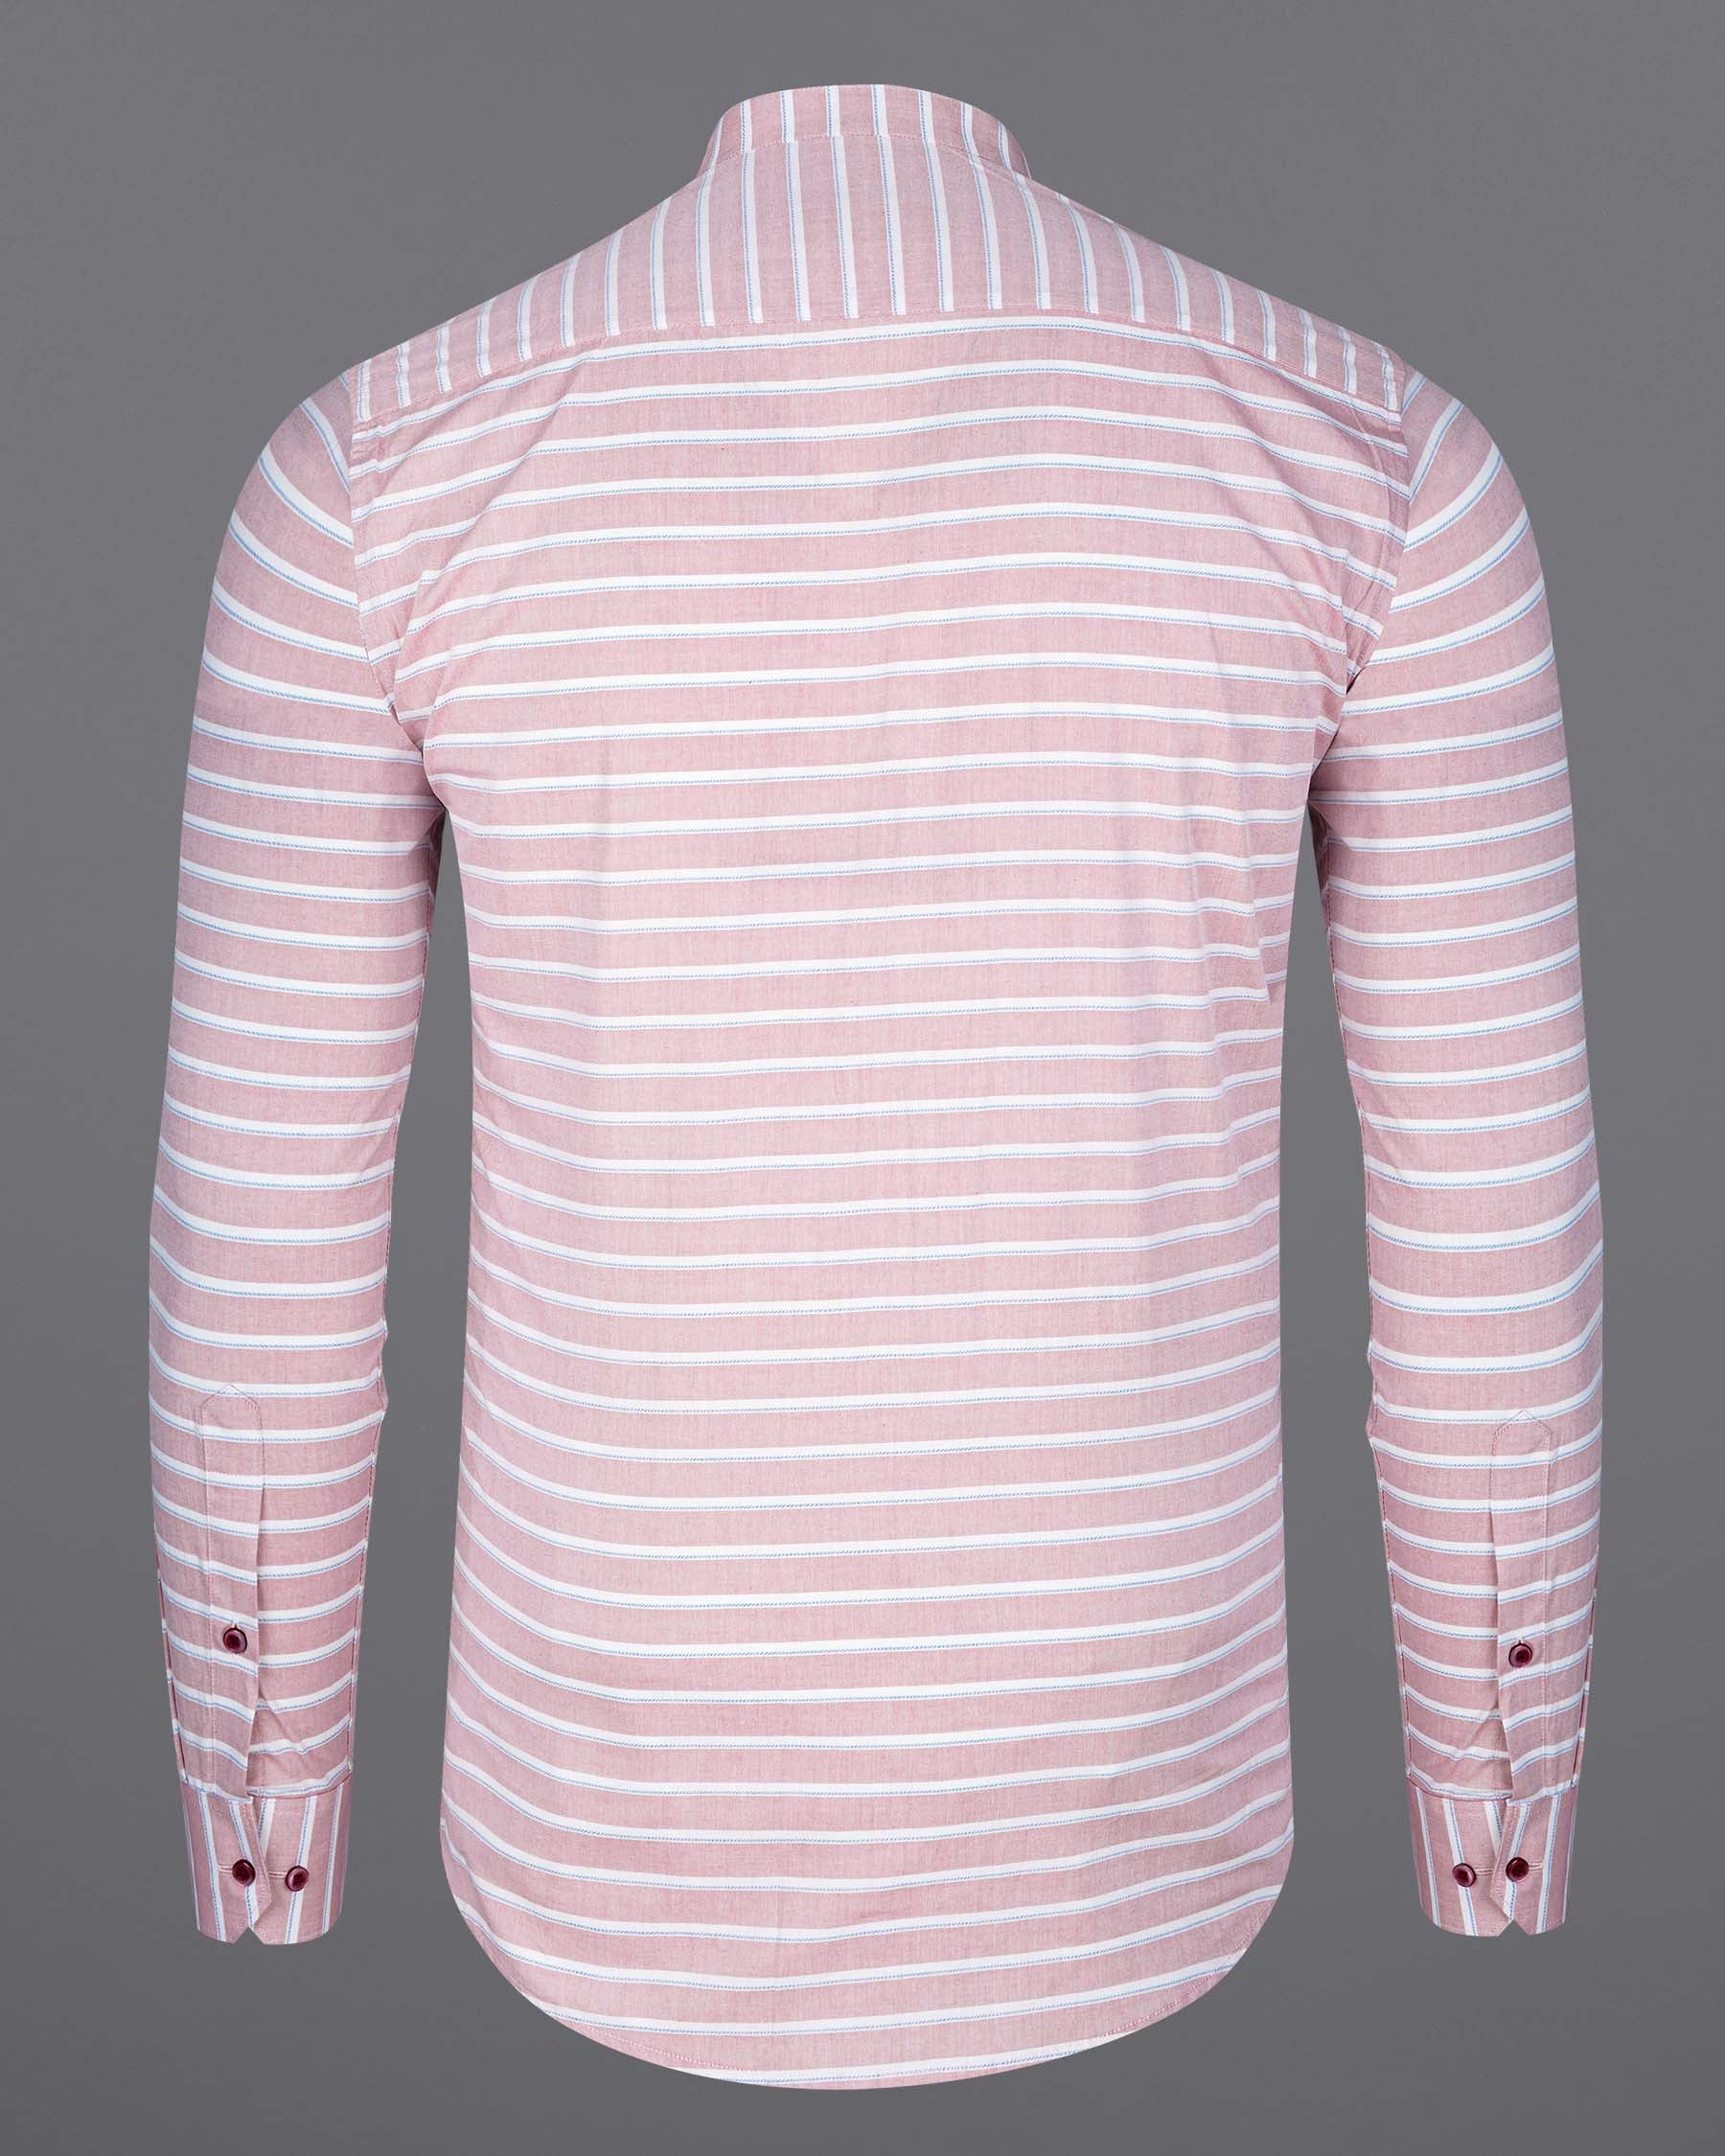 Twilight Pink With White Striped Dobby Textured  Premium Giza Cotton Shirt 7913-M-MN -38,7913-M-MN -H-38,7913-M-MN -39,7913-M-MN -H-39,7913-M-MN -40,7913-M-MN -H-40,7913-M-MN -42,7913-M-MN -H-42,7913-M-MN -44,7913-M-MN -H-44,7913-M-MN -46,7913-M-MN -H-46,7913-M-MN -48,7913-M-MN -H-48,7913-M-MN -50,7913-M-MN -H-50,7913-M-MN -52,7913-M-MN -H-52